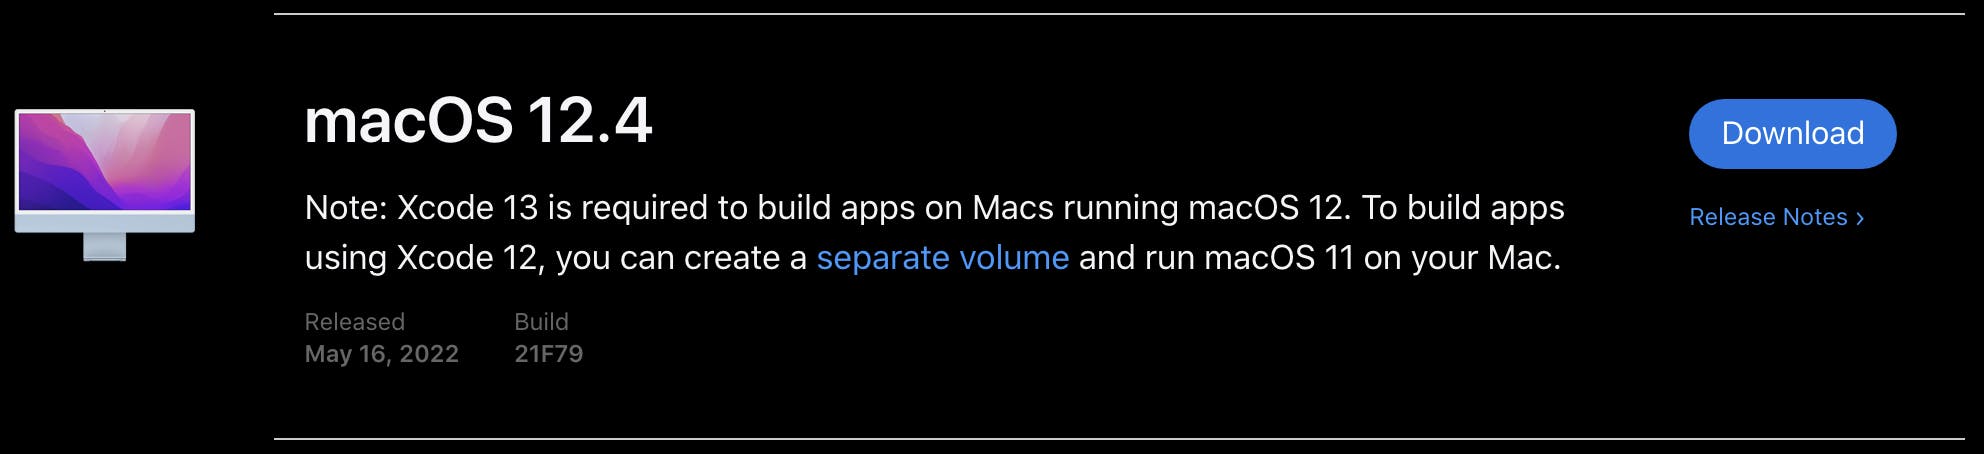 macOS 12.4 Download.png